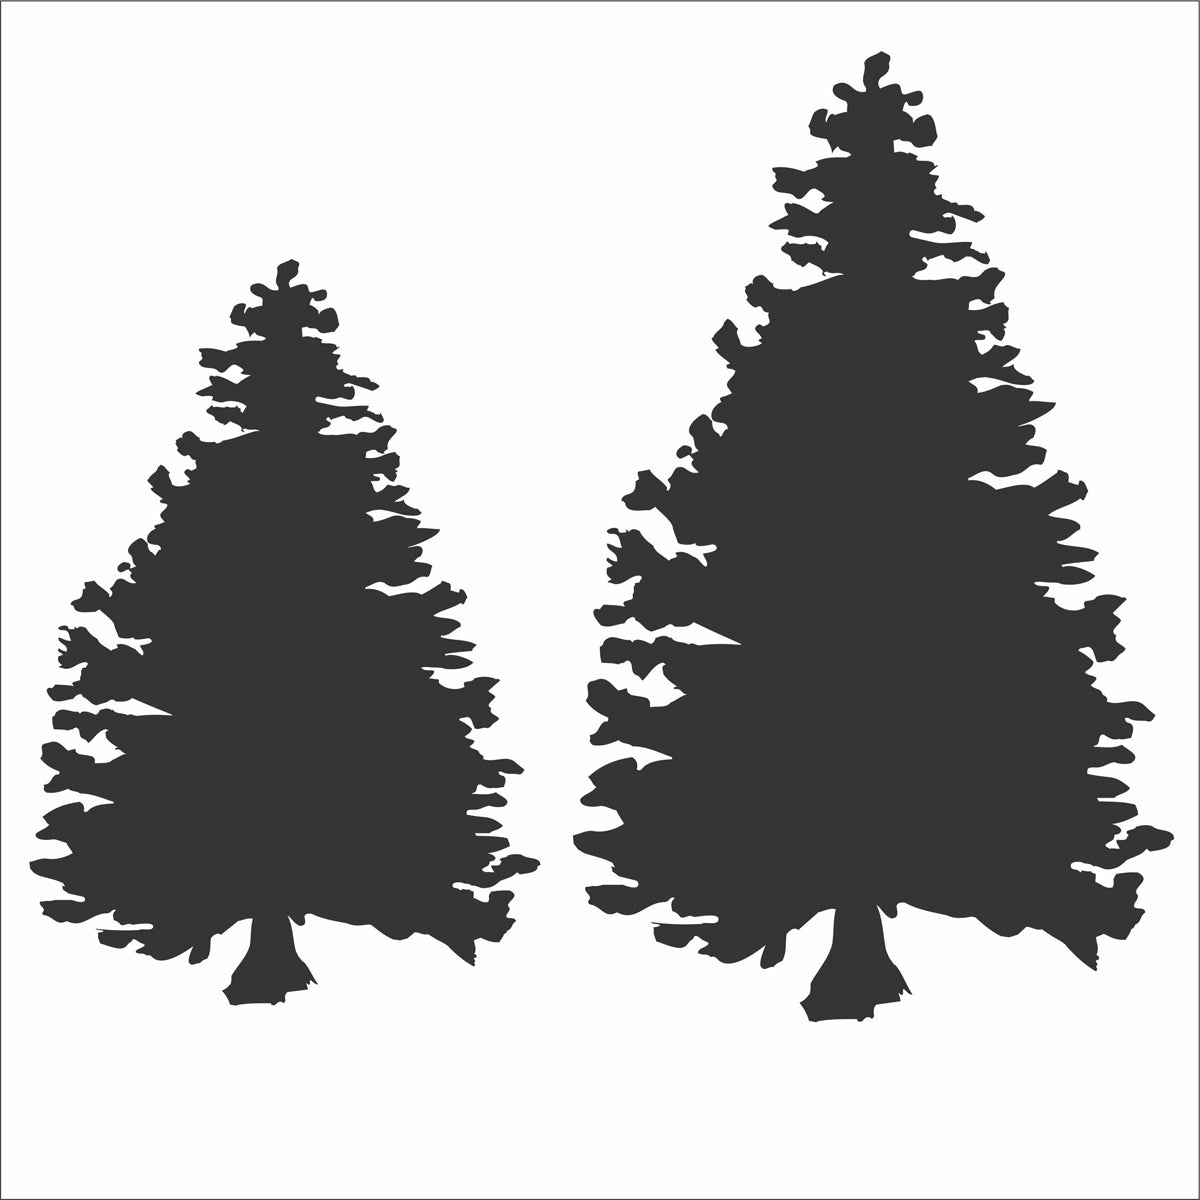 Pine Tree Stencil 2